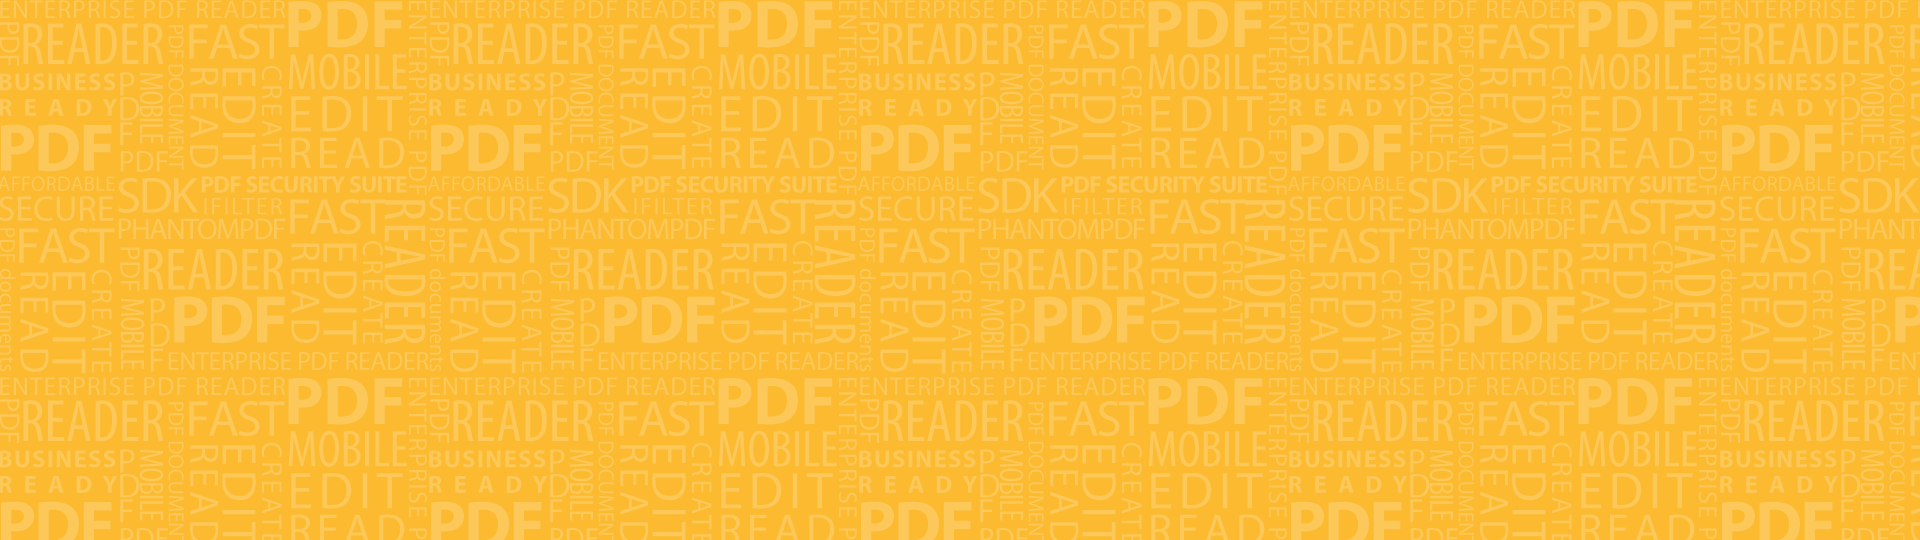 free download pdf reader, pdf editor and pdf converter